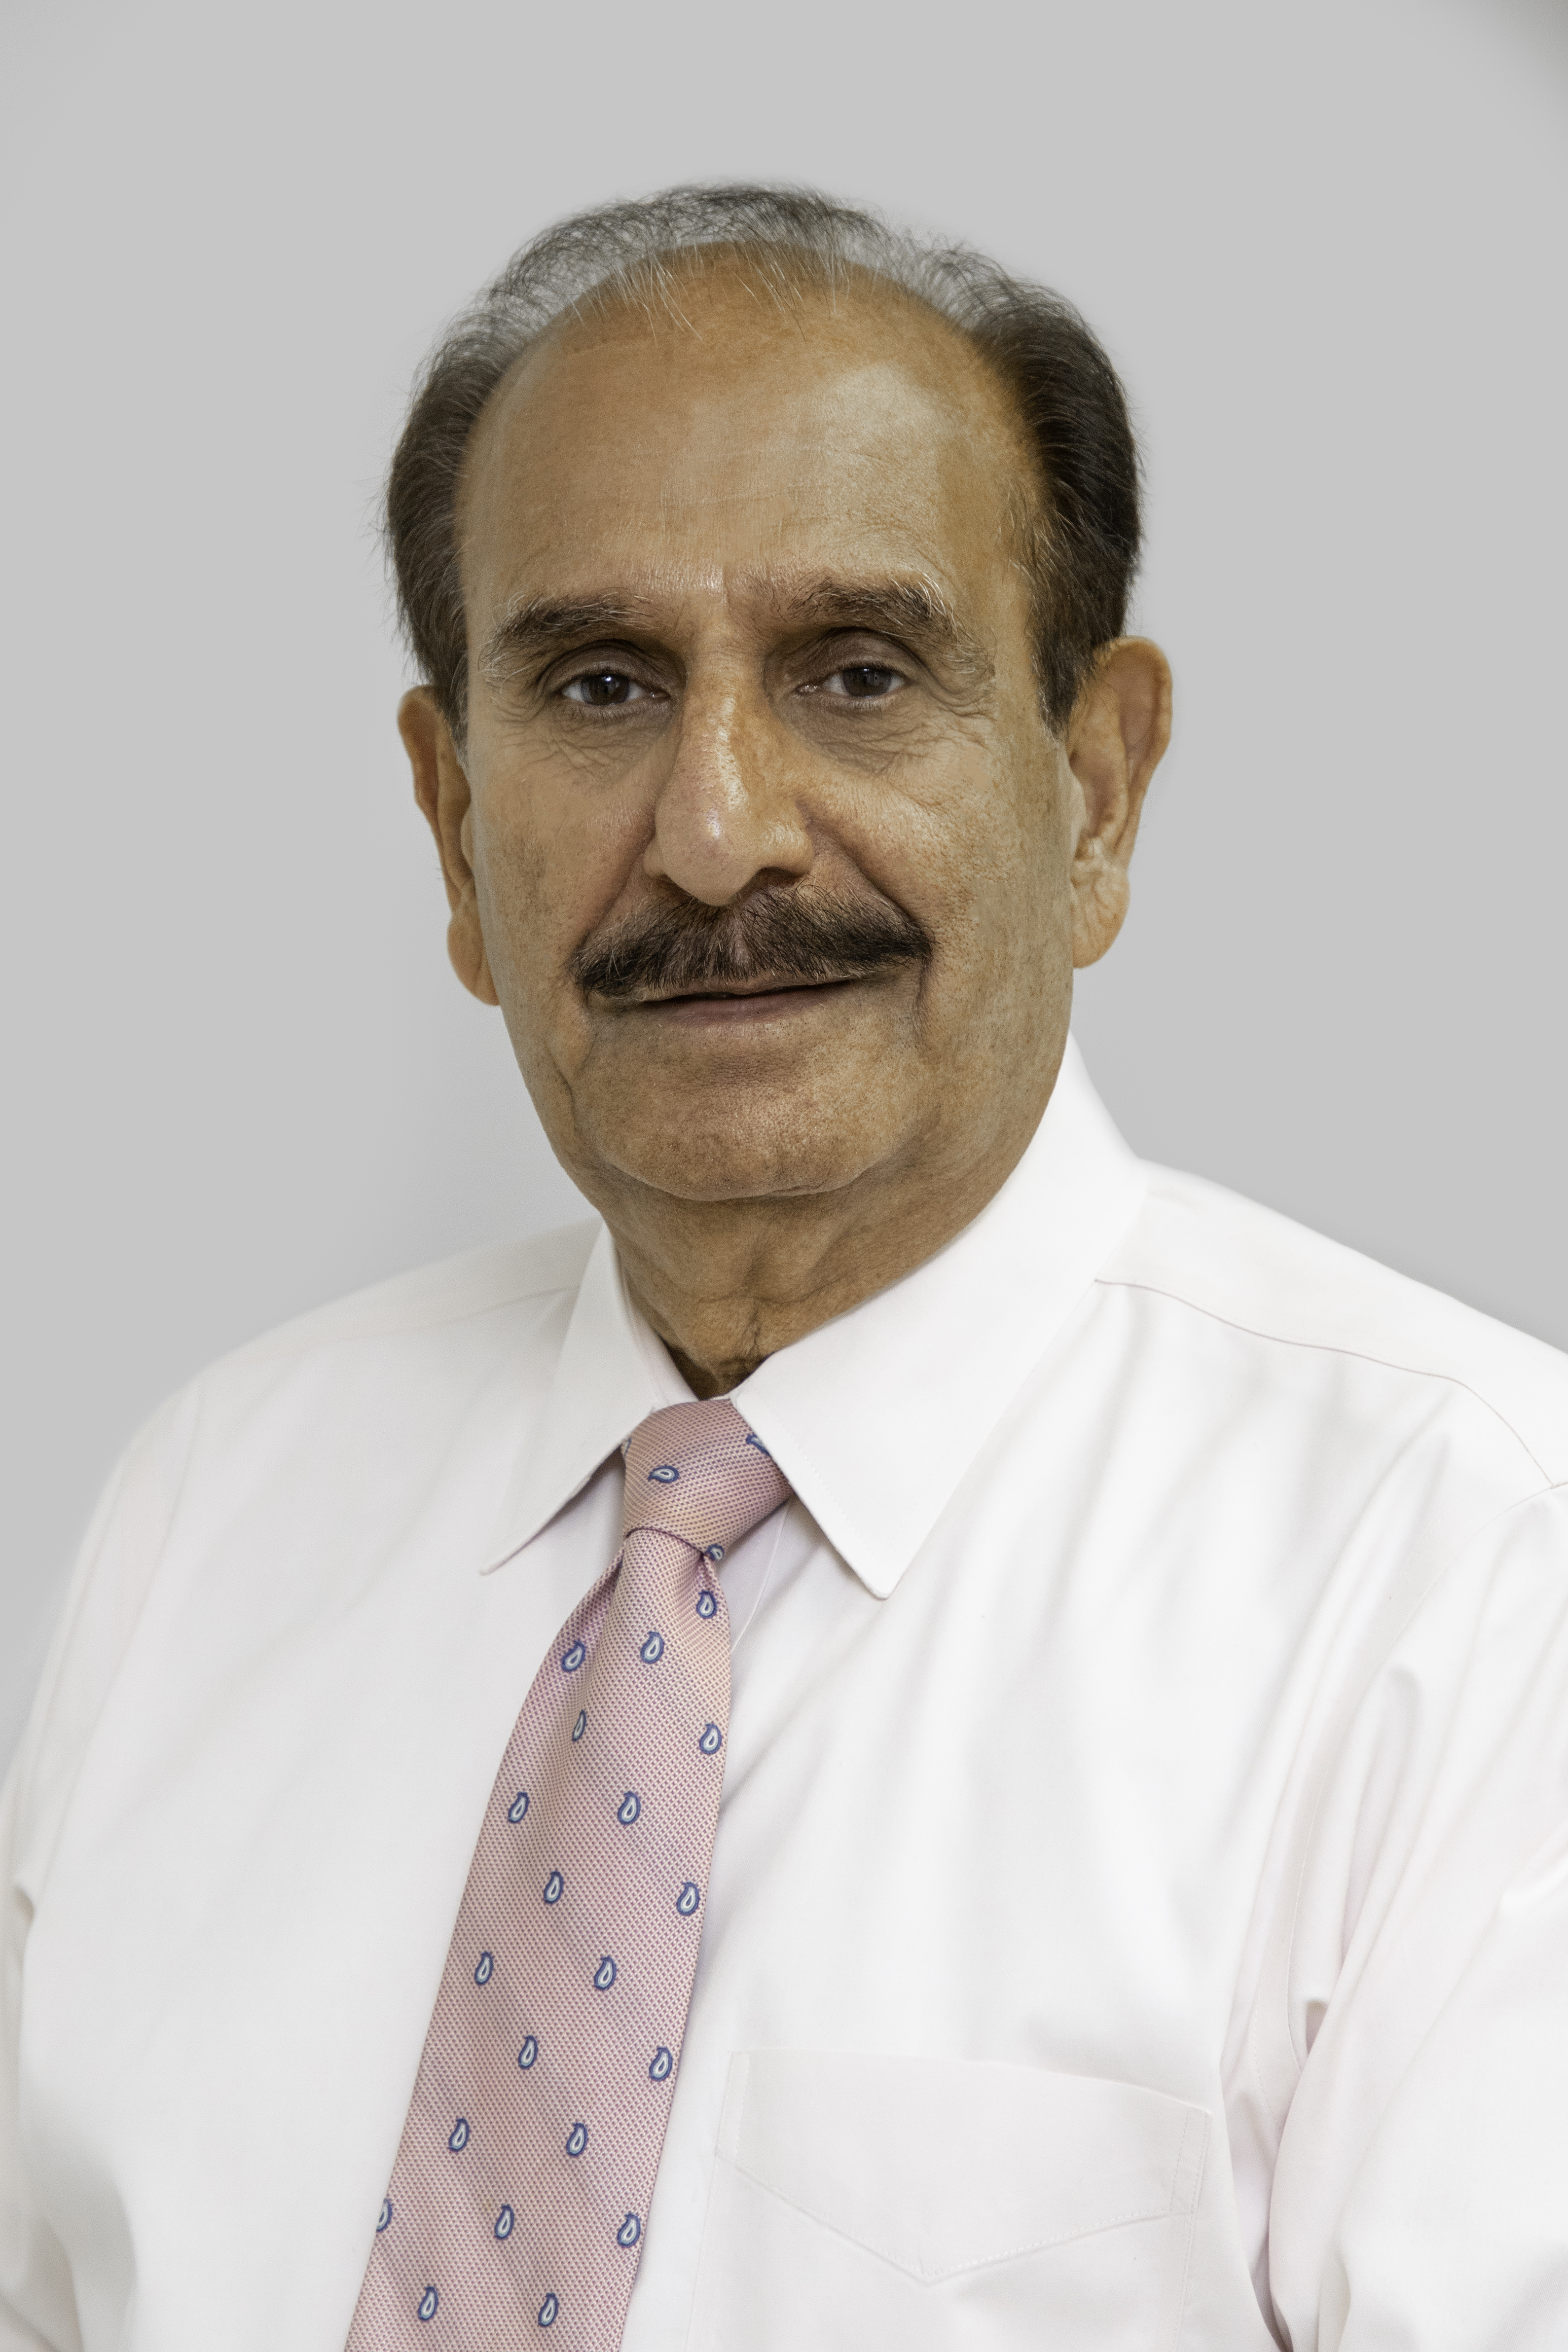 Singh Ahluwalia, Brij, MD